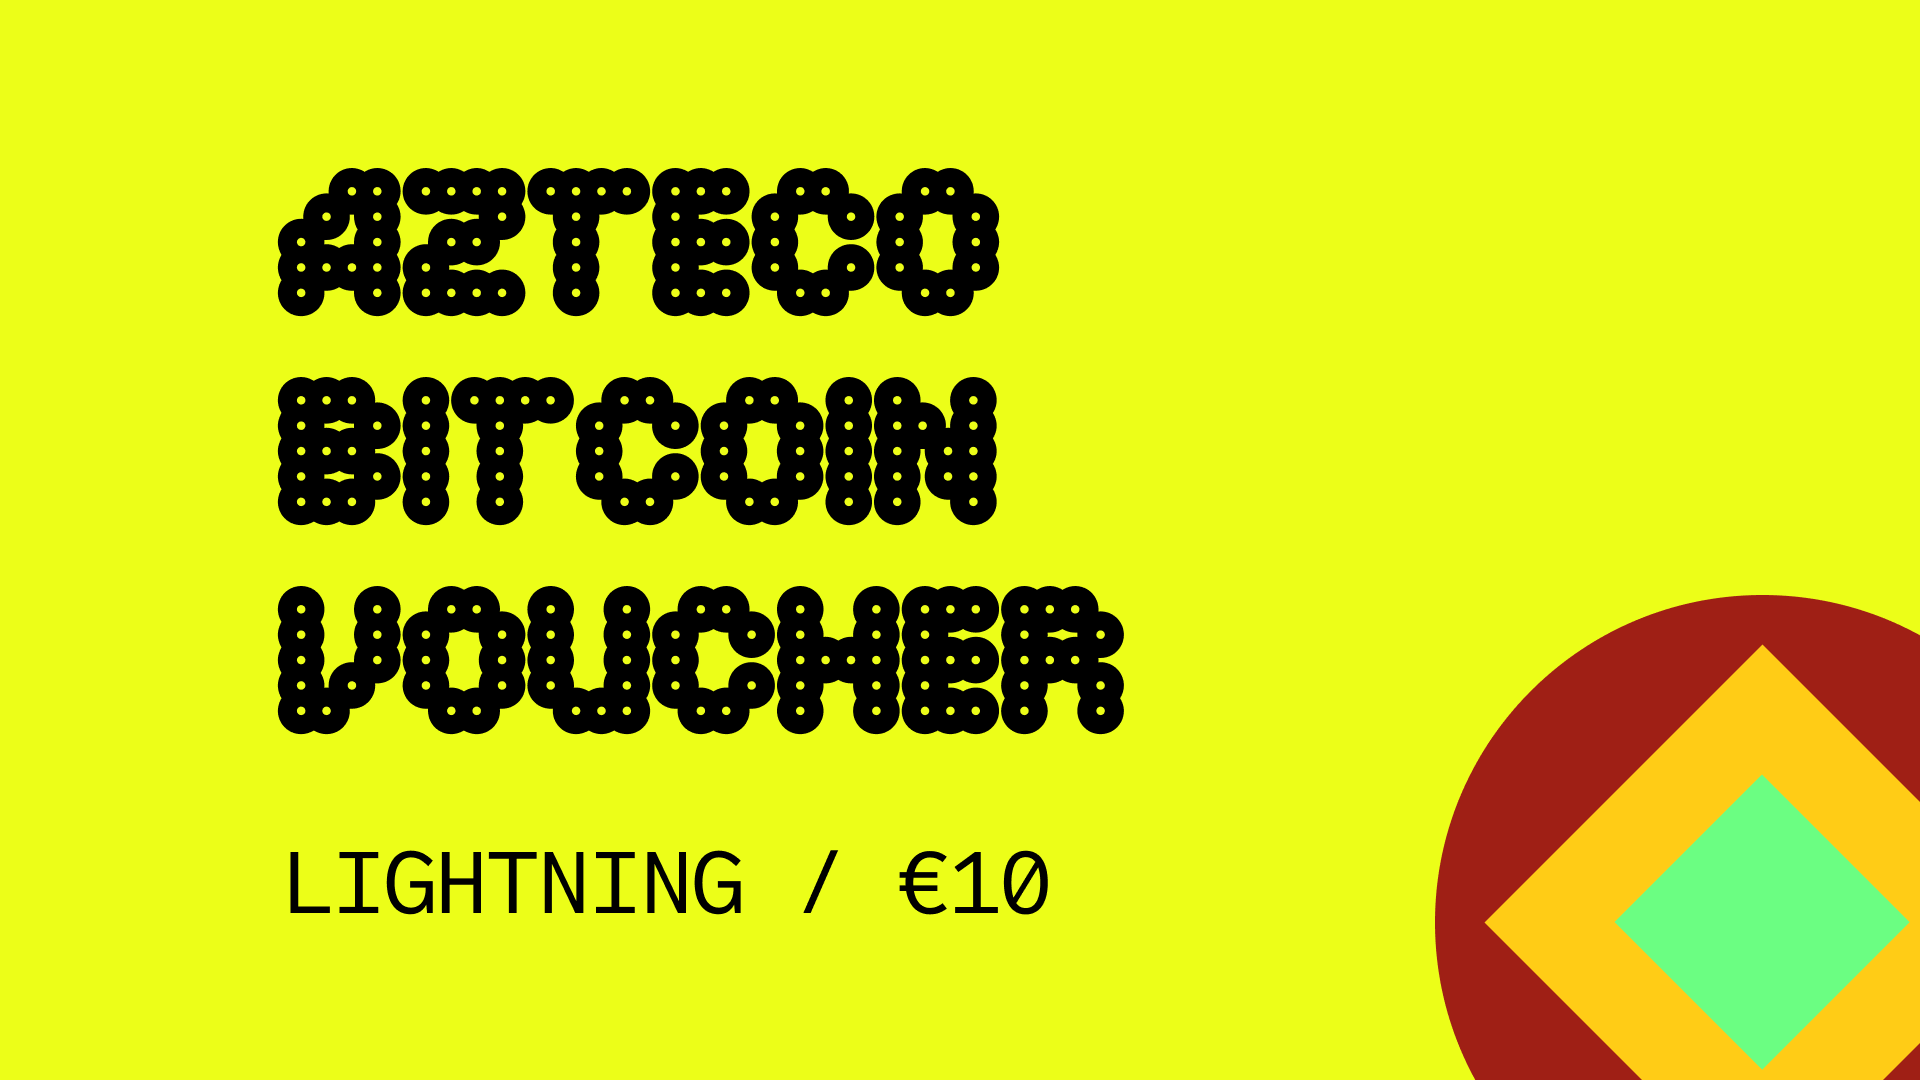 Azteco Bitcoin Lighting €10 Voucher 11.3$